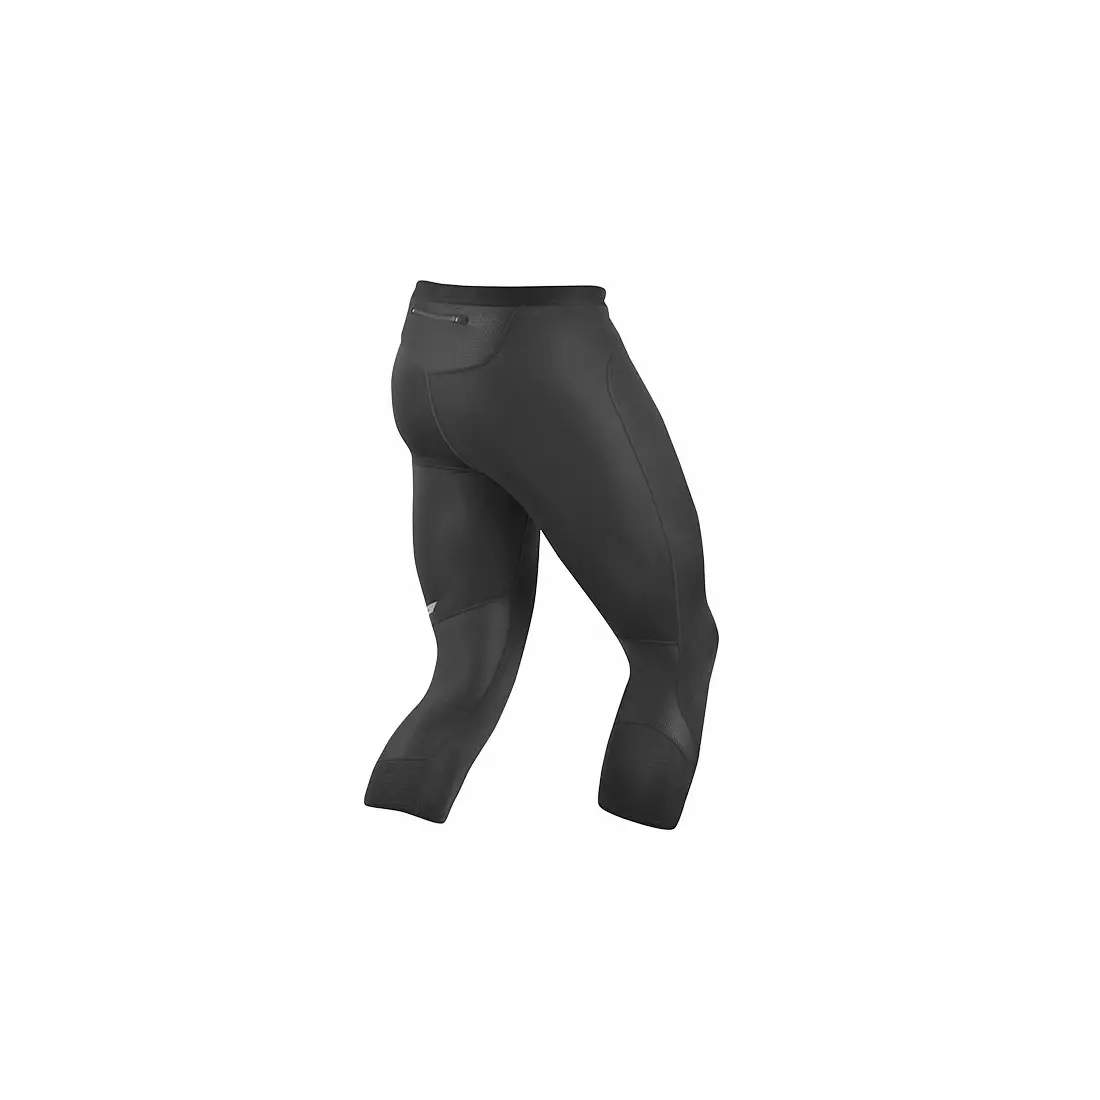 PEARL IZUMI RUN pánské běžecké šortky 3/4 FLASH 12111401-021, barva: černá